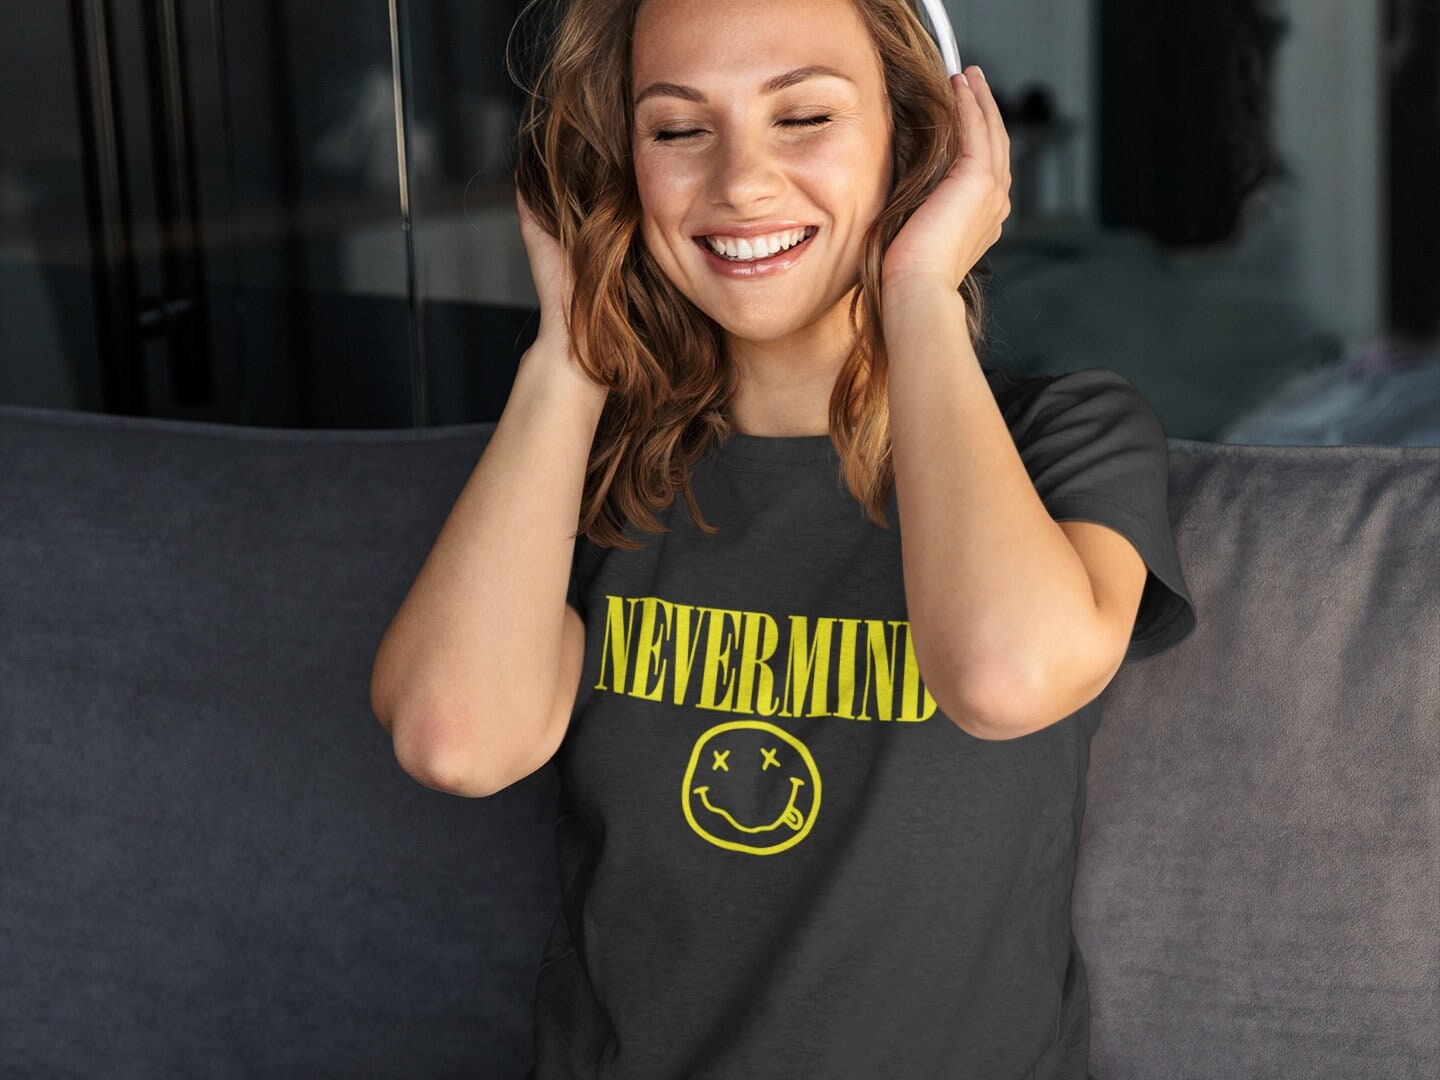 Nevermind T Shirt - Etsy